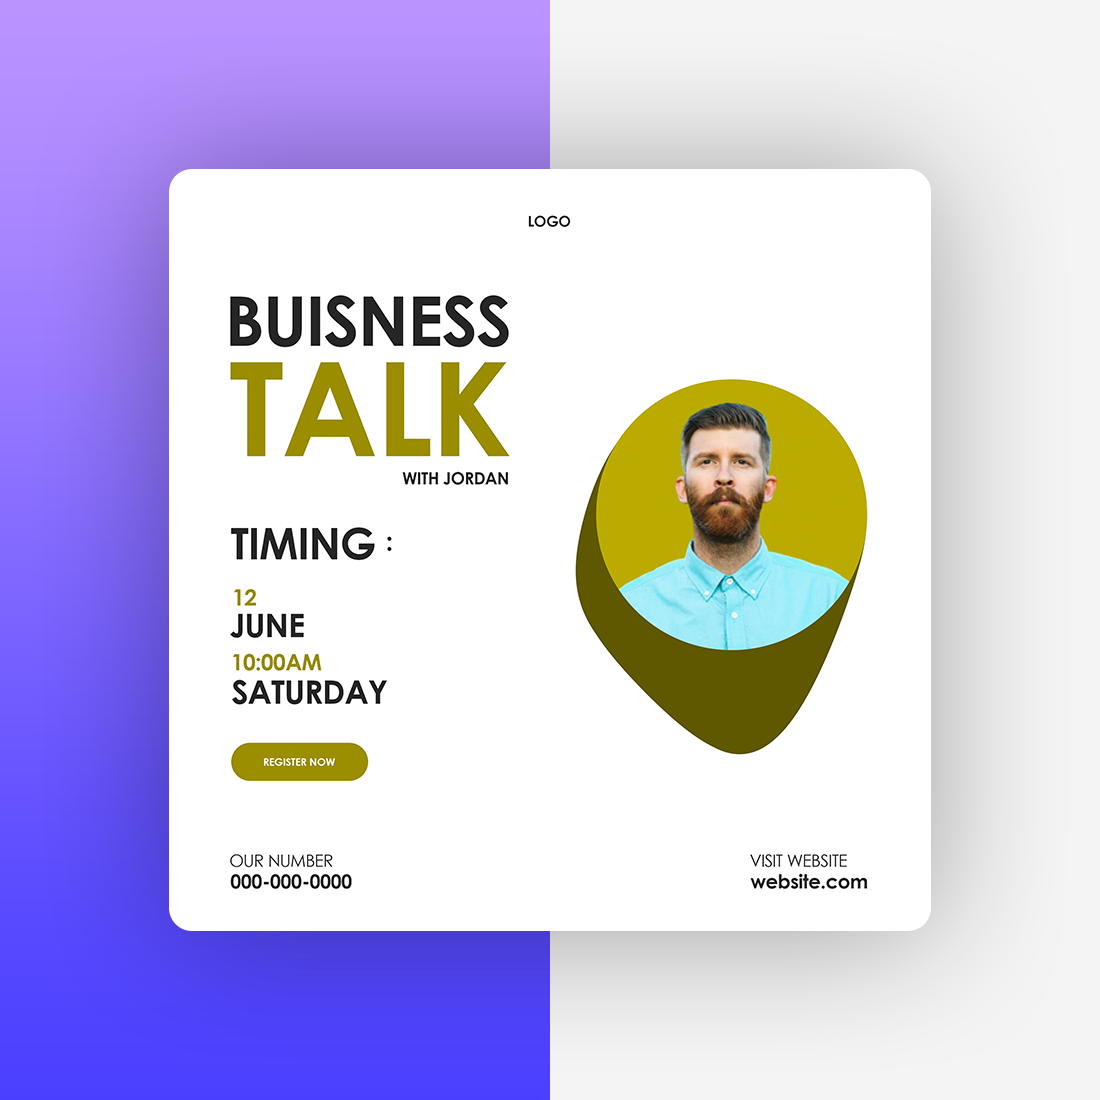 Business Talk Social Media Post Design cover image.